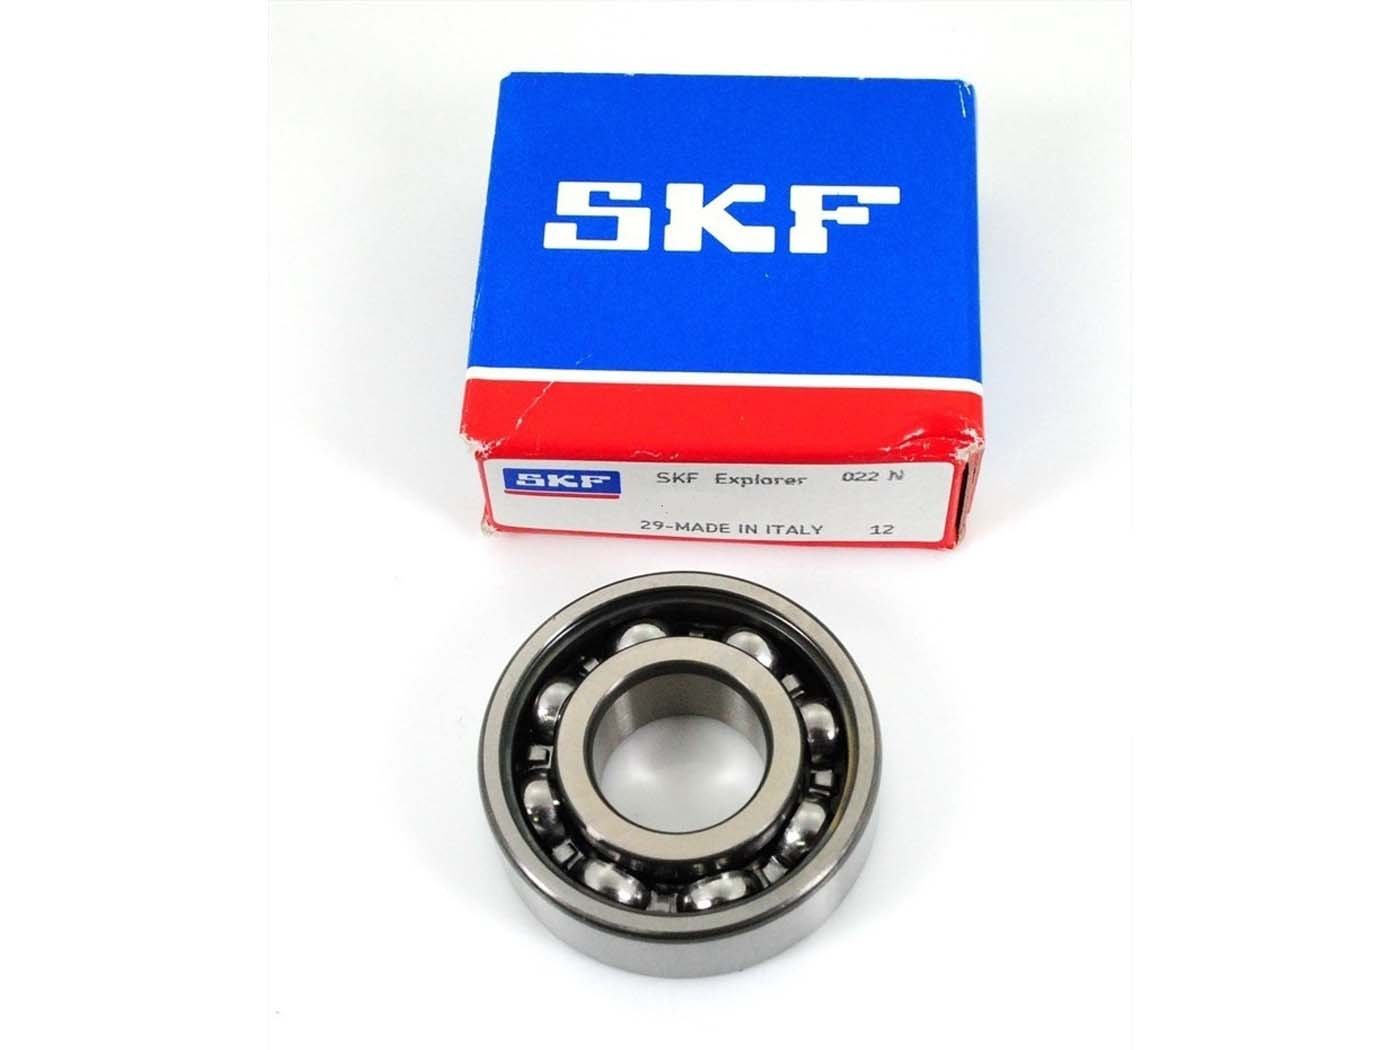 Motor Bearing SKF 6302 C3 Open